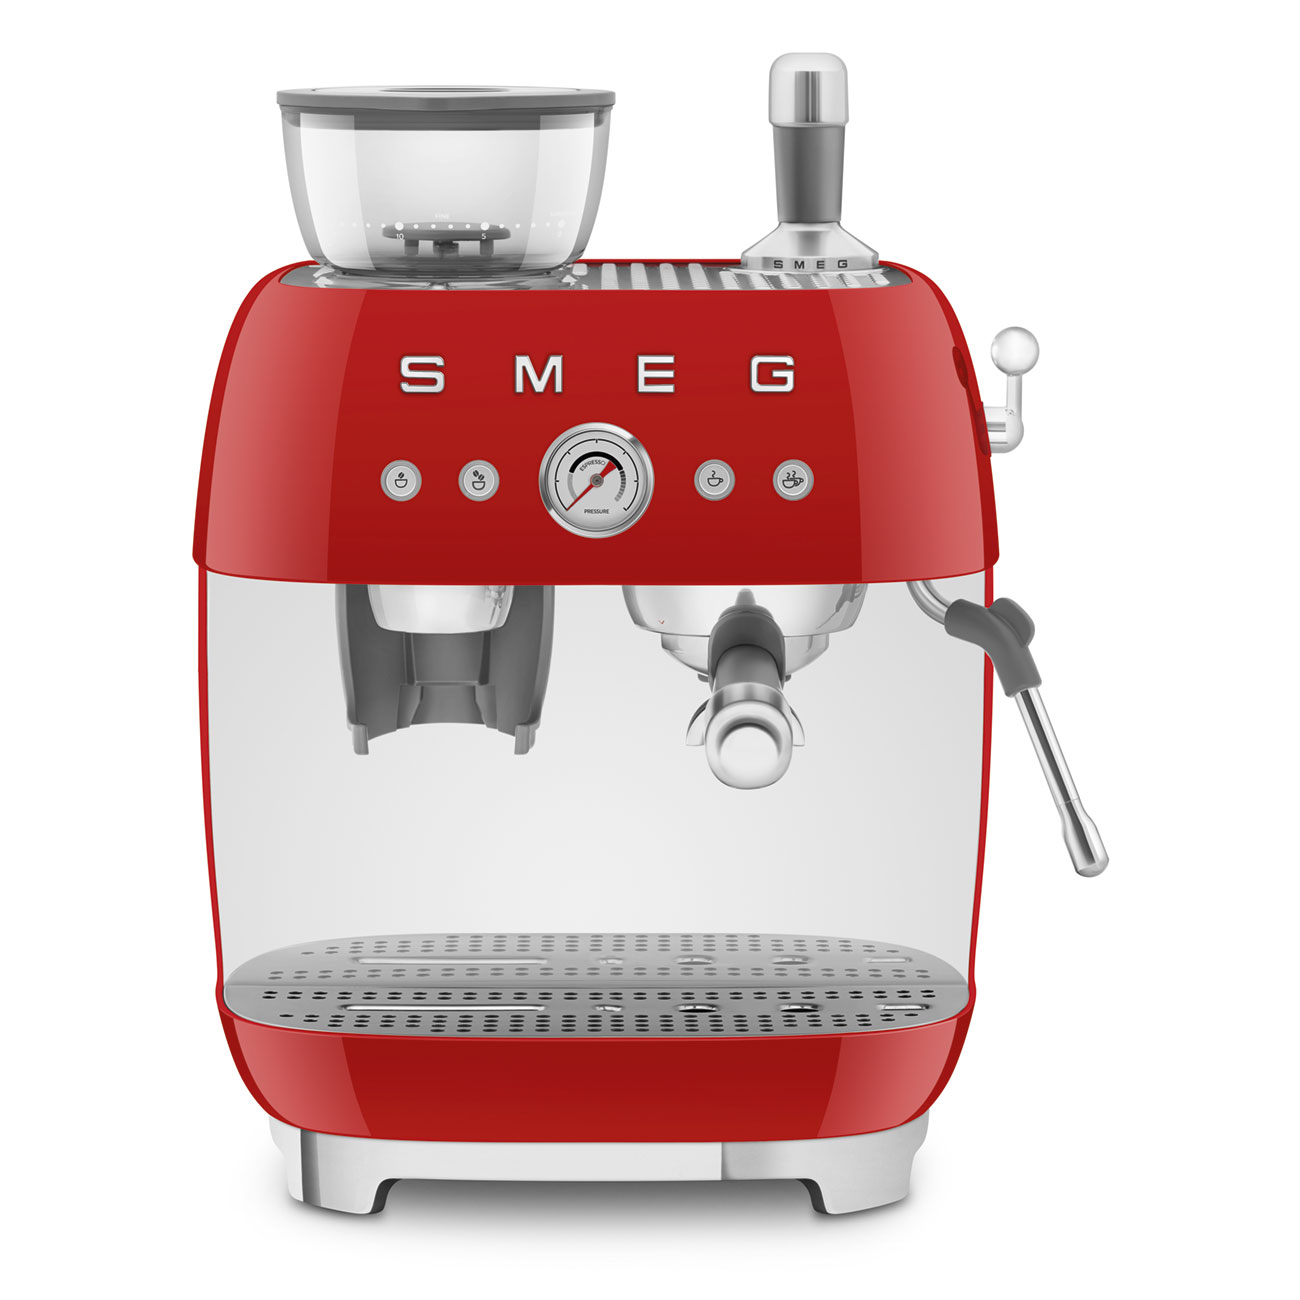 Smeg Red Espresso Manual Coffee Machine with Grinder_1